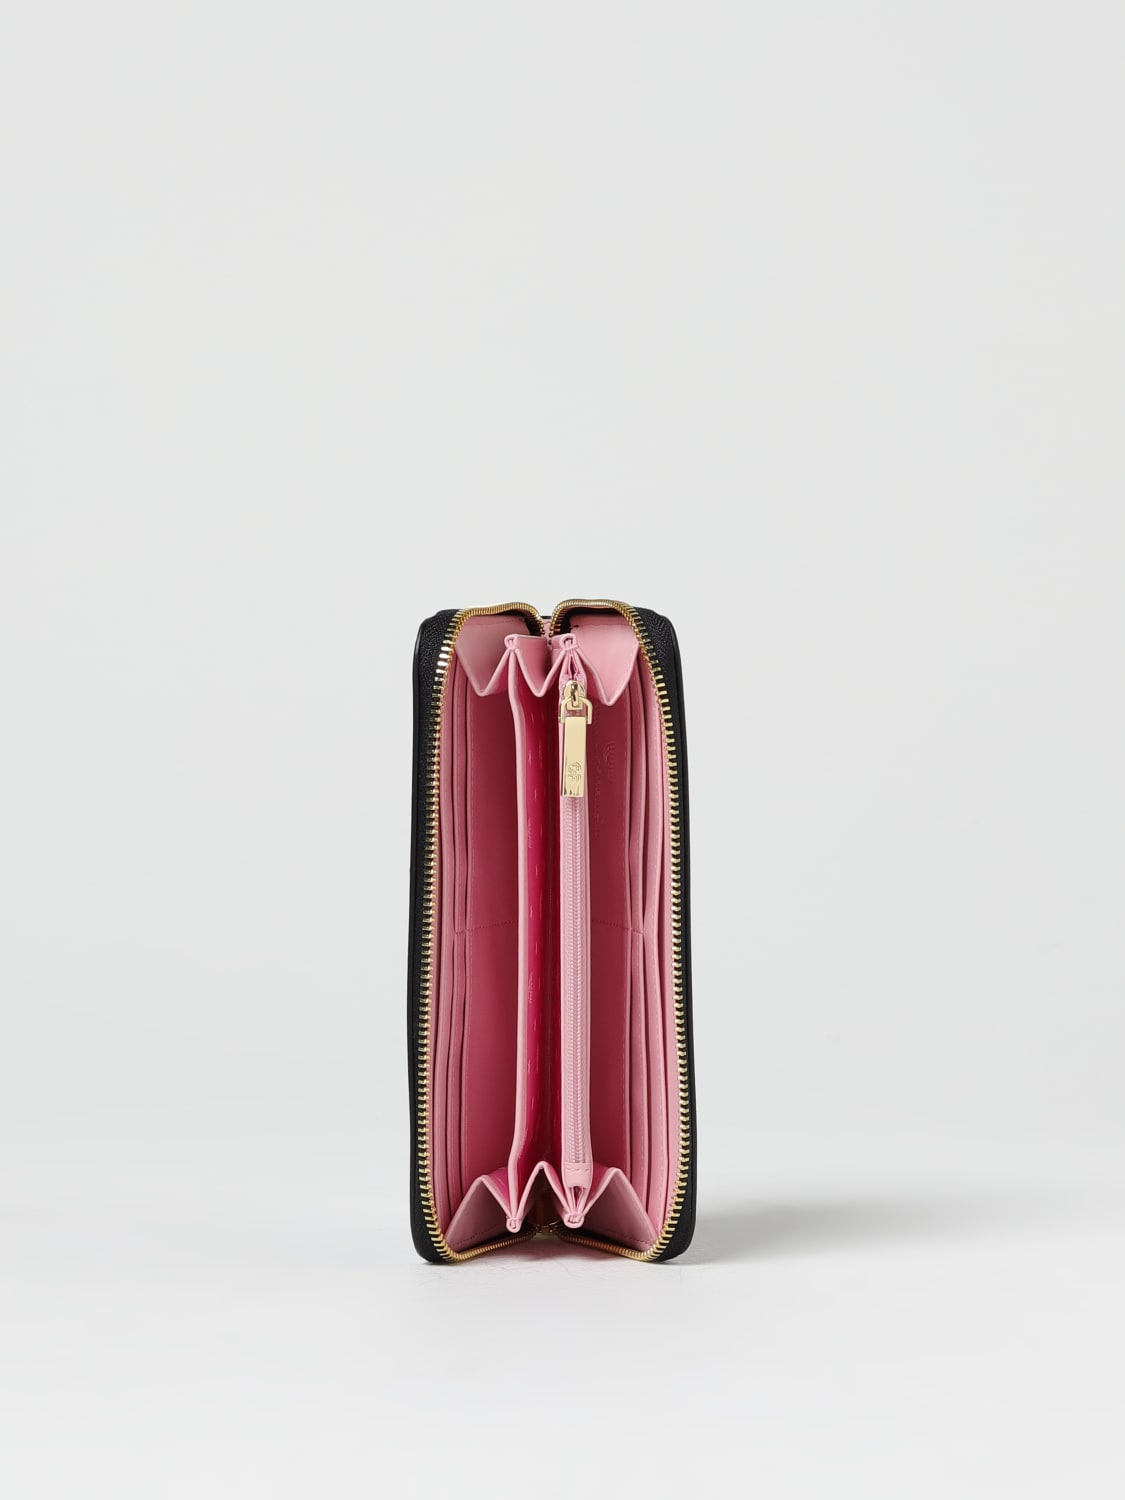 Mocasines Louis Vuitton de color rojo para Hombre - Vestiaire Collective